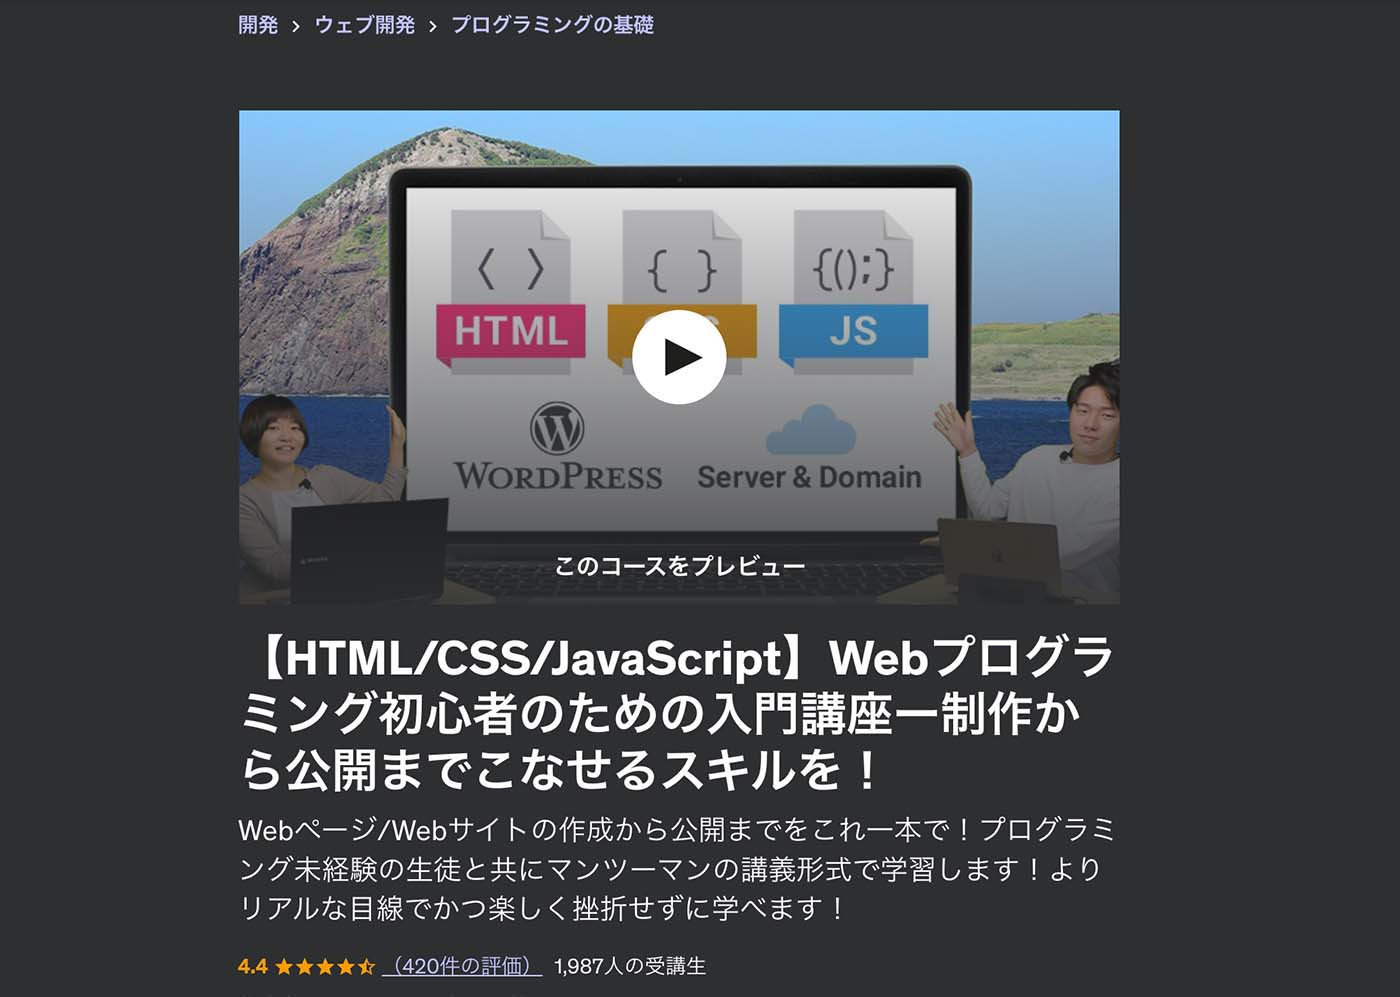 Udemyの学習動画の参考スクリーンショット。HTML/CSS/JavaScriptを学べる、Webプログラミング初心者のための入門講座